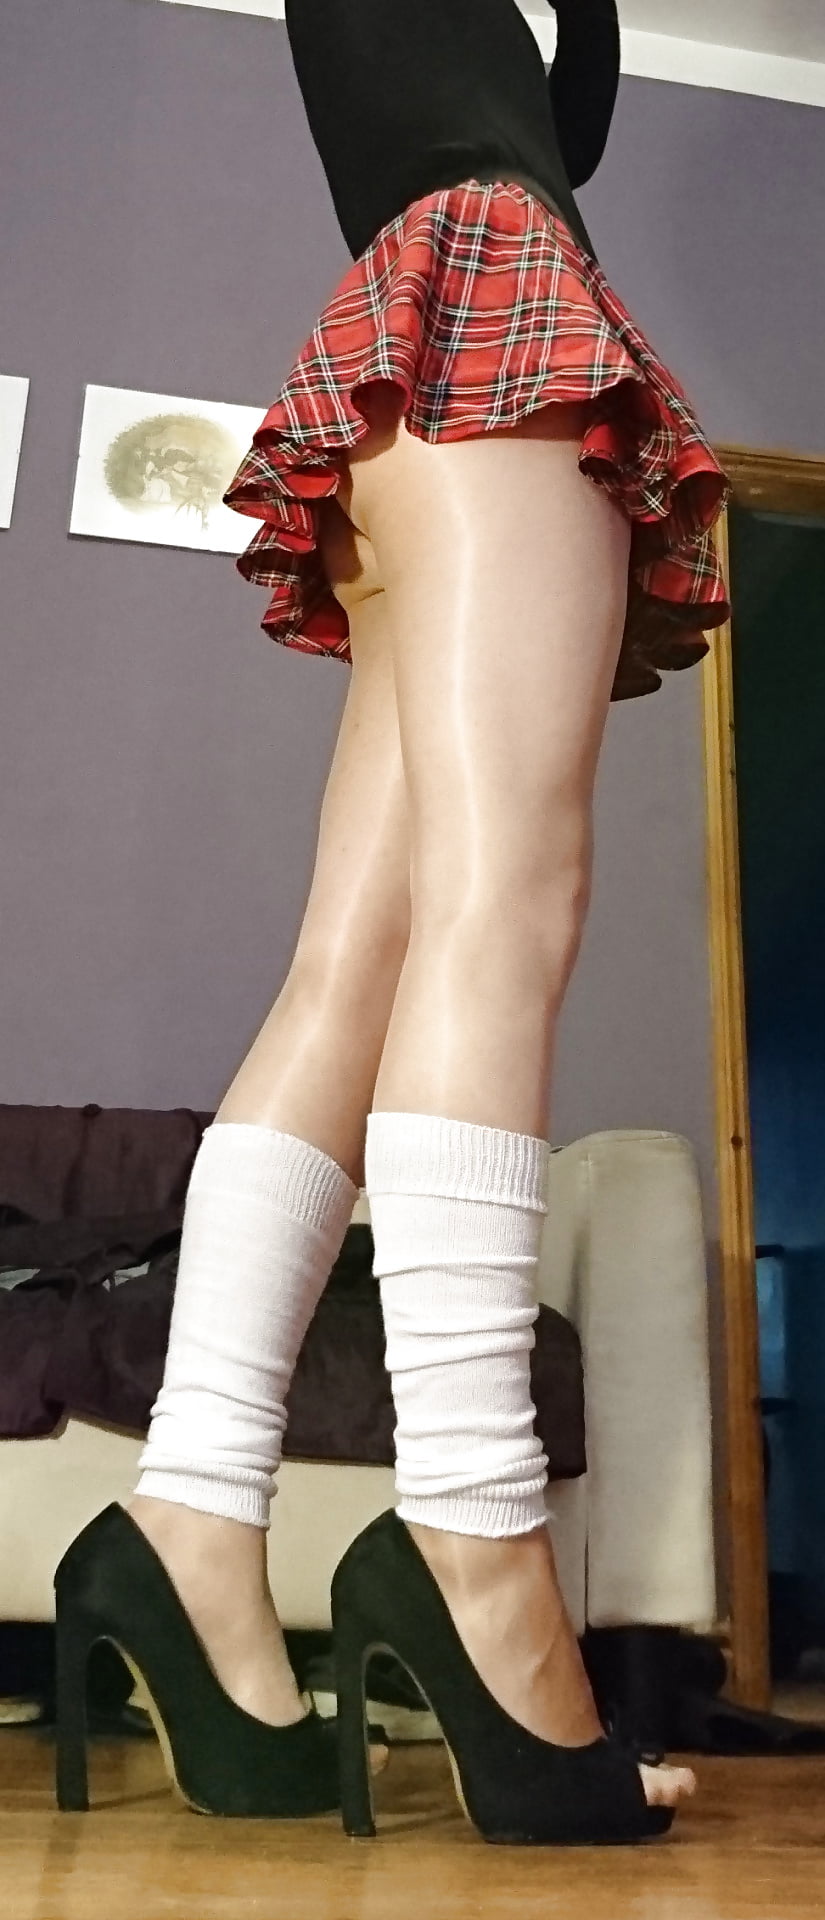 Marie crossdresser college girl, leg warmers and pantyhose #106757949